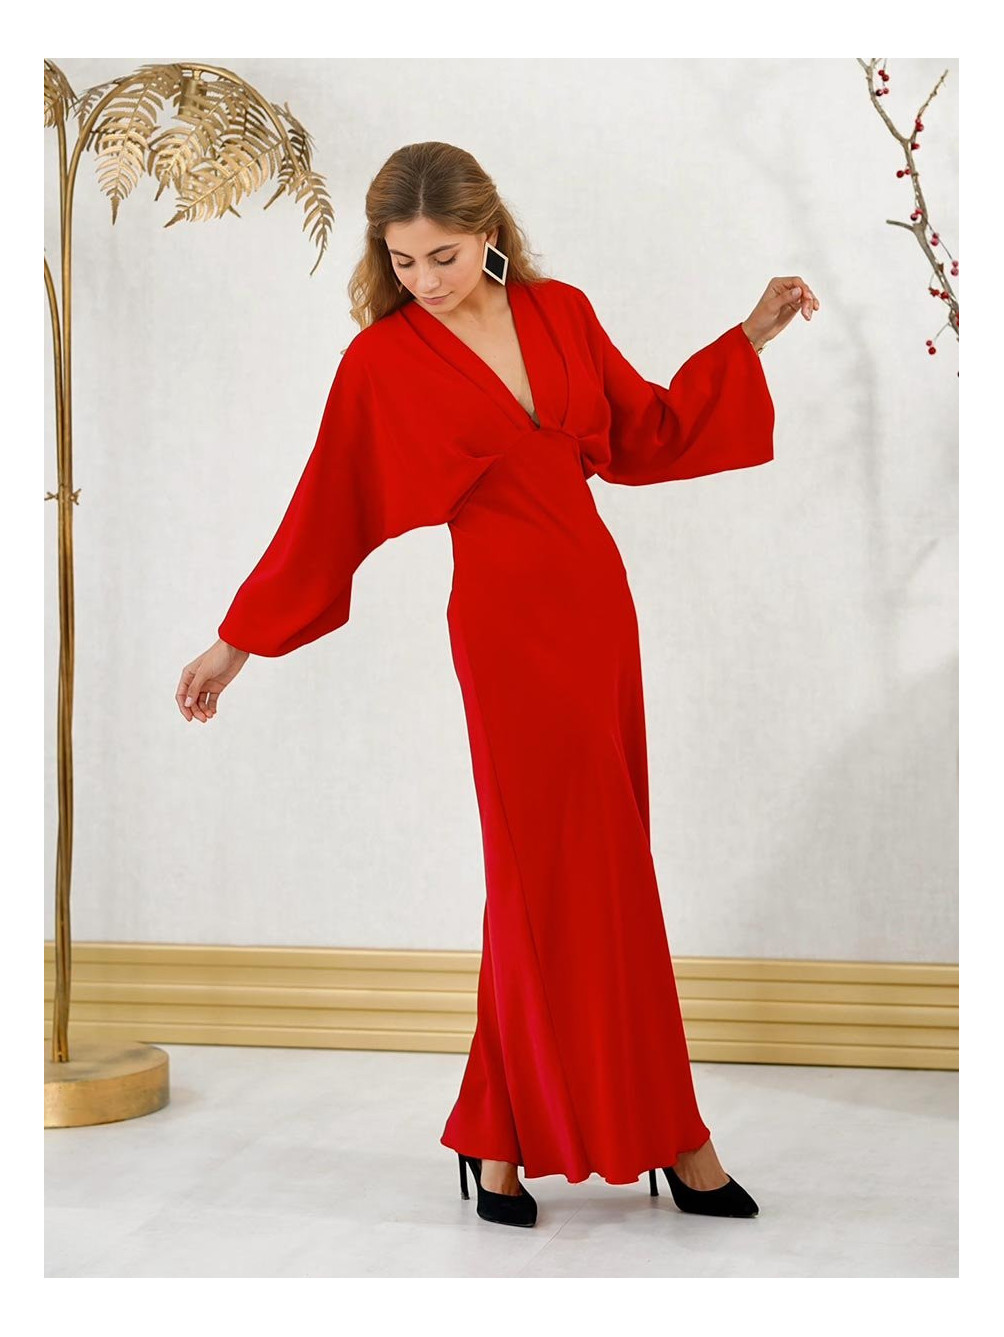 Vestido Carmen Rouge Winter, Vestido Rojo Invitada, Vestido Nochevieja, Mariquita Trasquilá